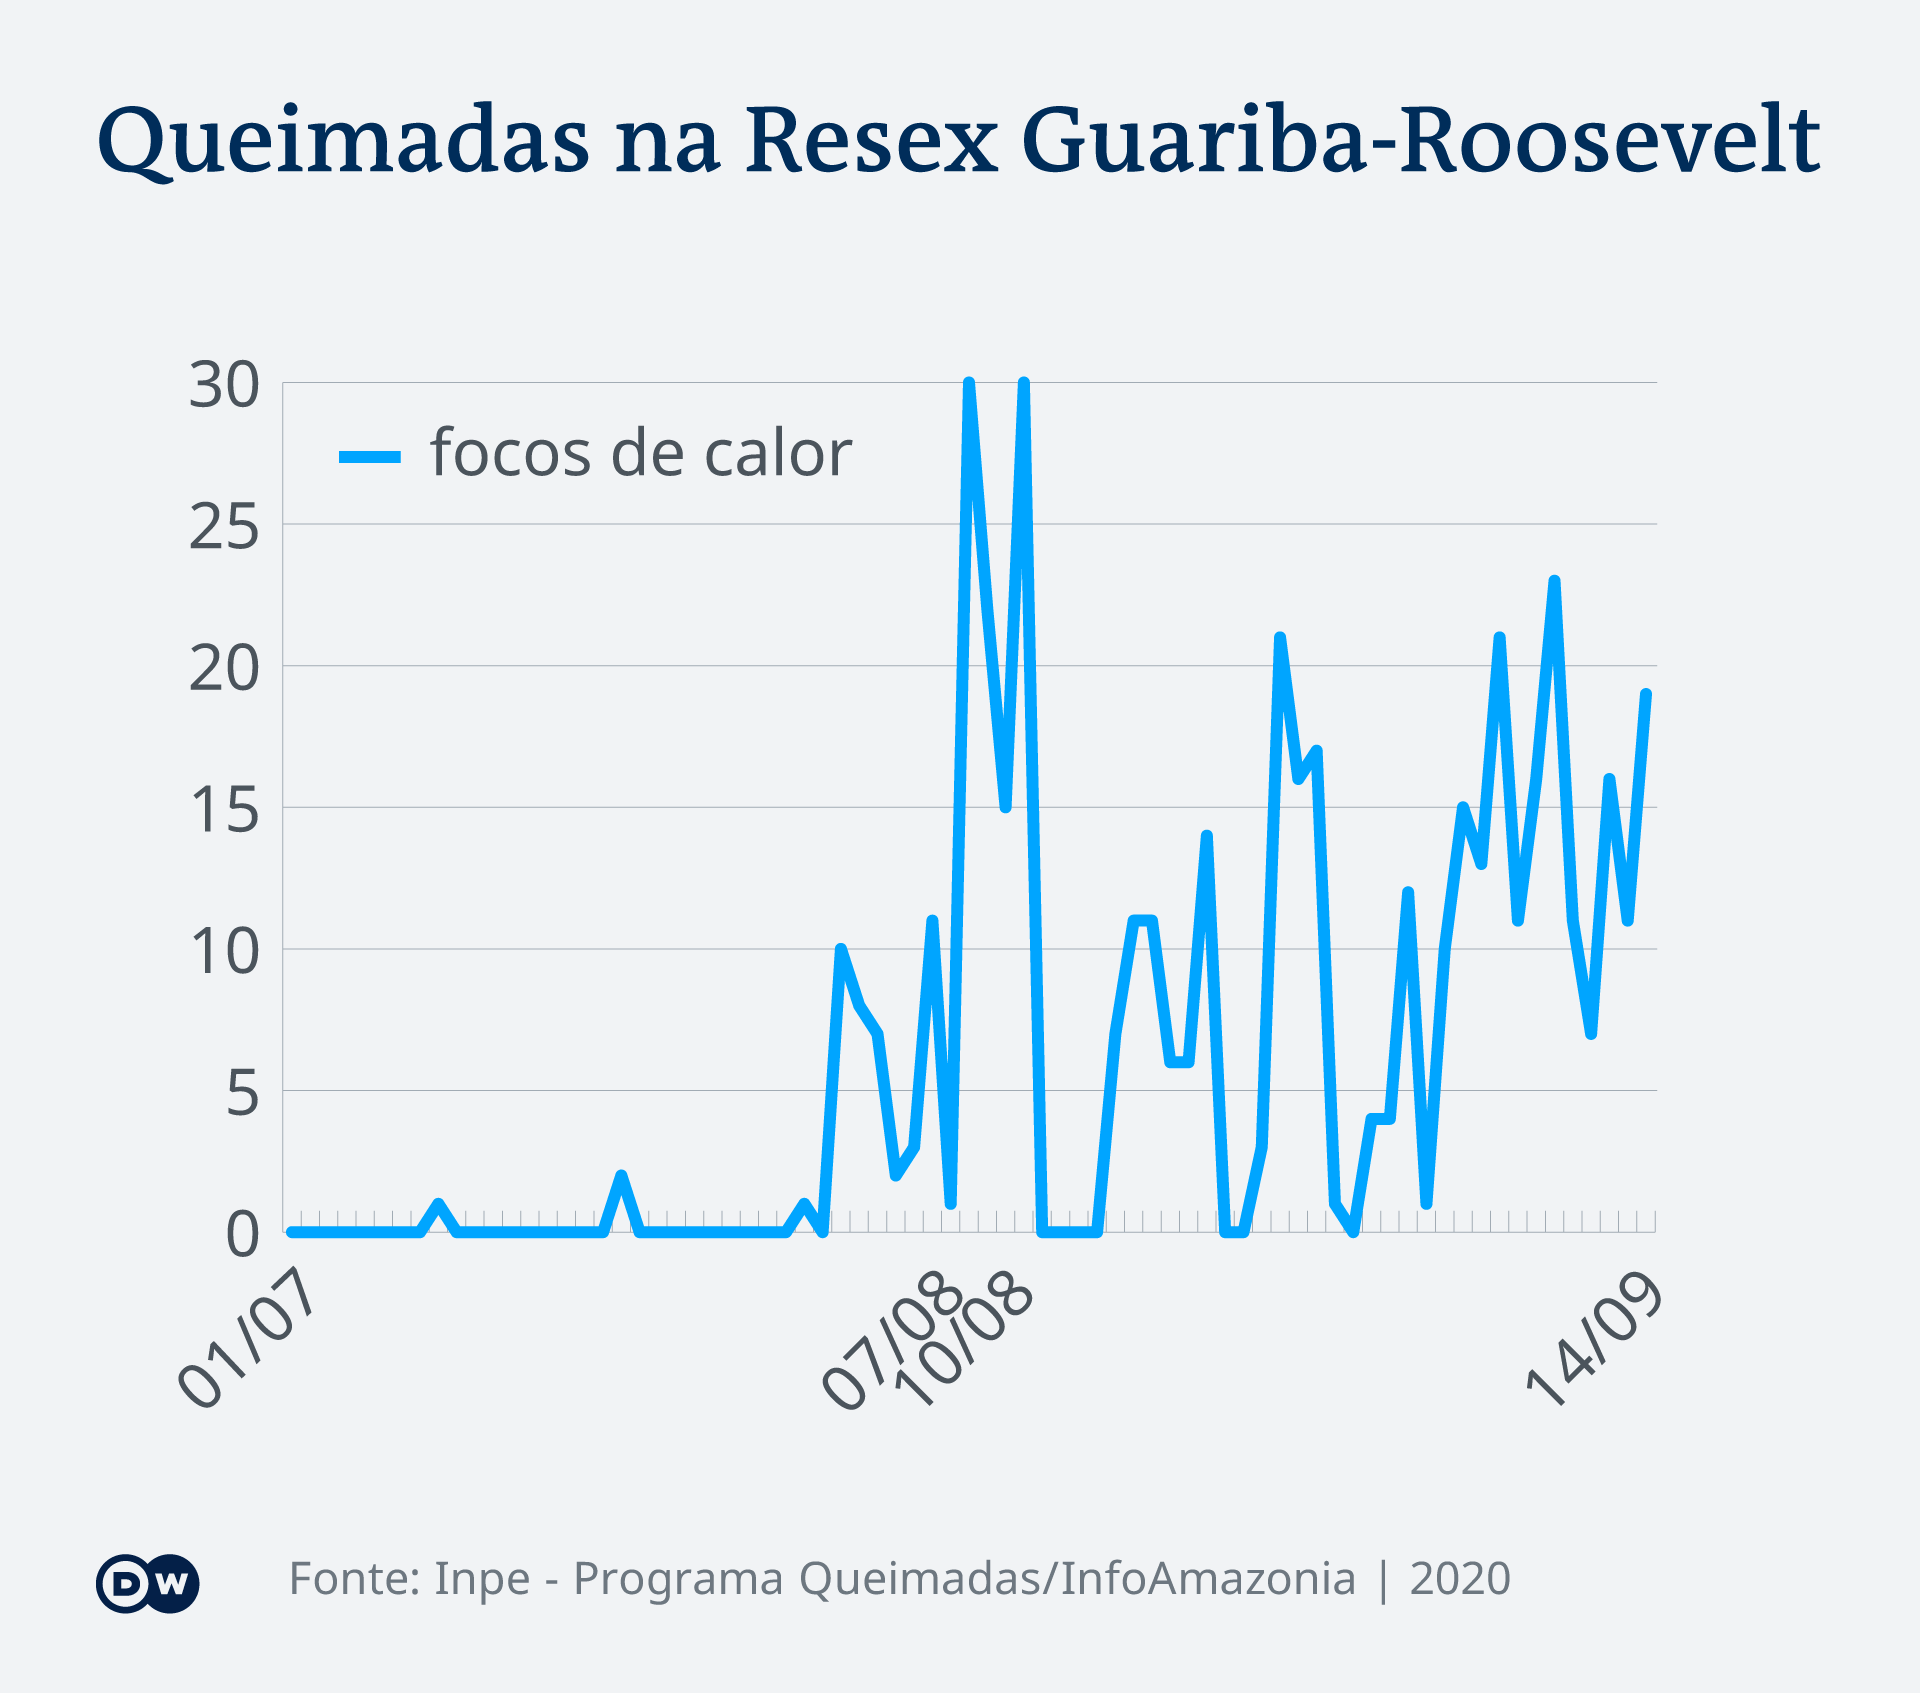 Queimadas na Resex Guariba-Roosevelt